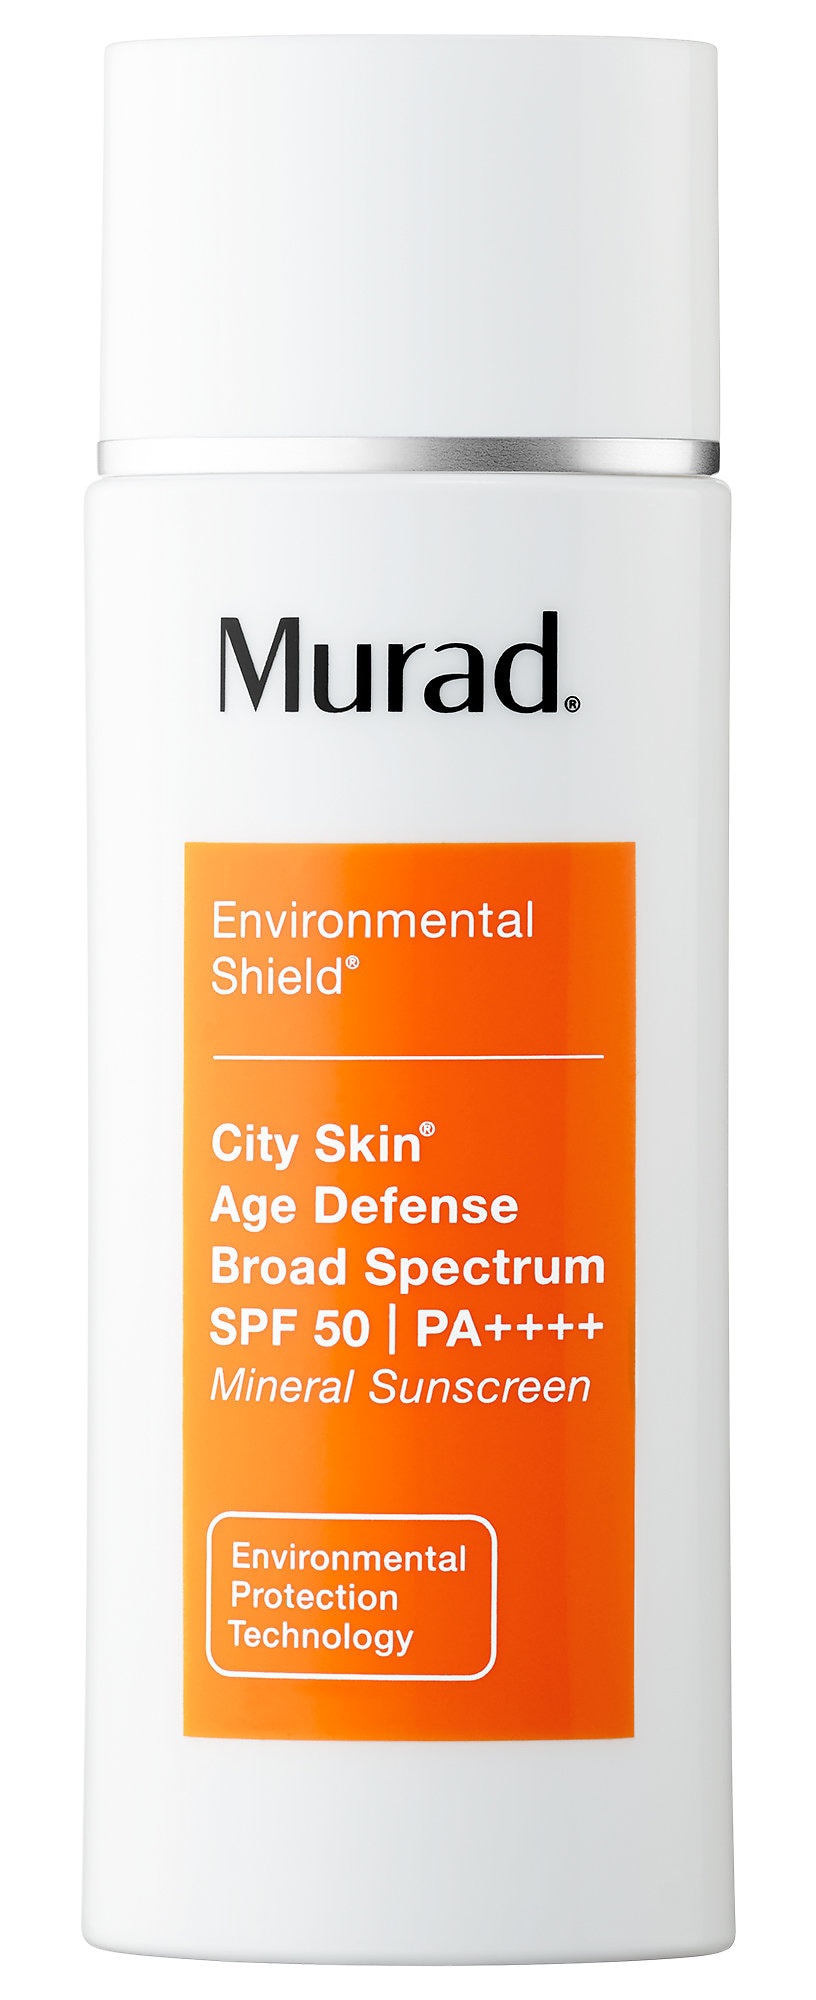 Murad City Skin Age Defense Broad Spectrum SPF 50 Pa++++